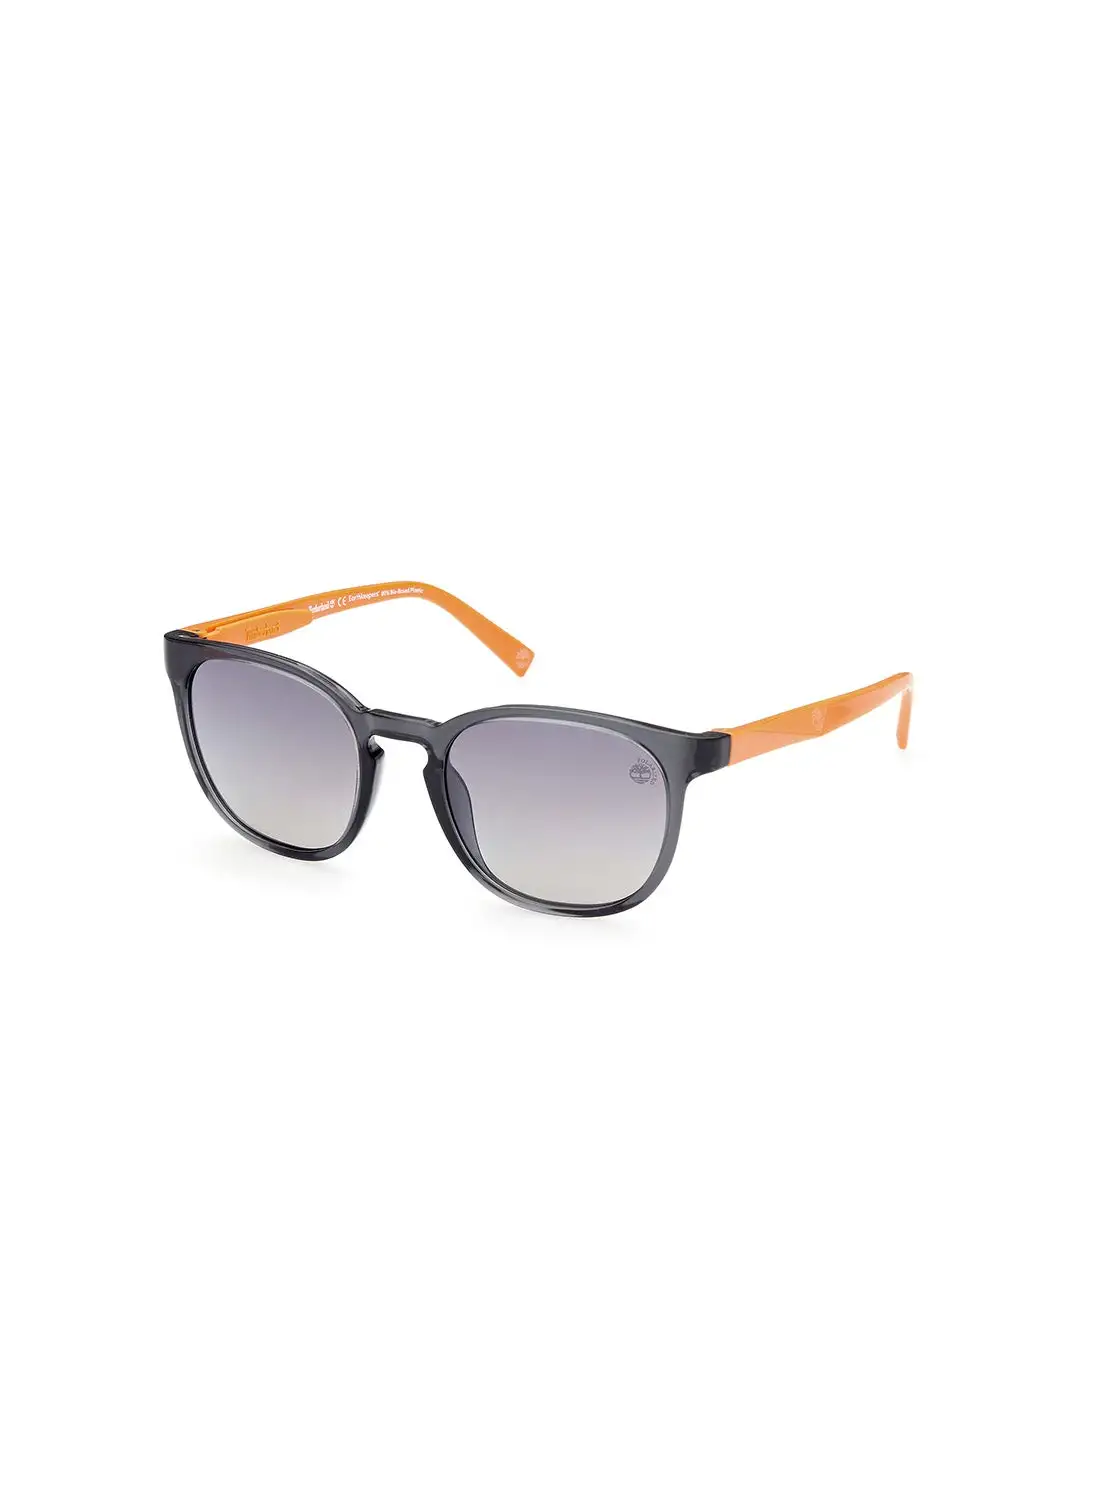 Timberland Men's Polarized Round Sunglasses - TB927420D53 - Lens Size: 53 Mm